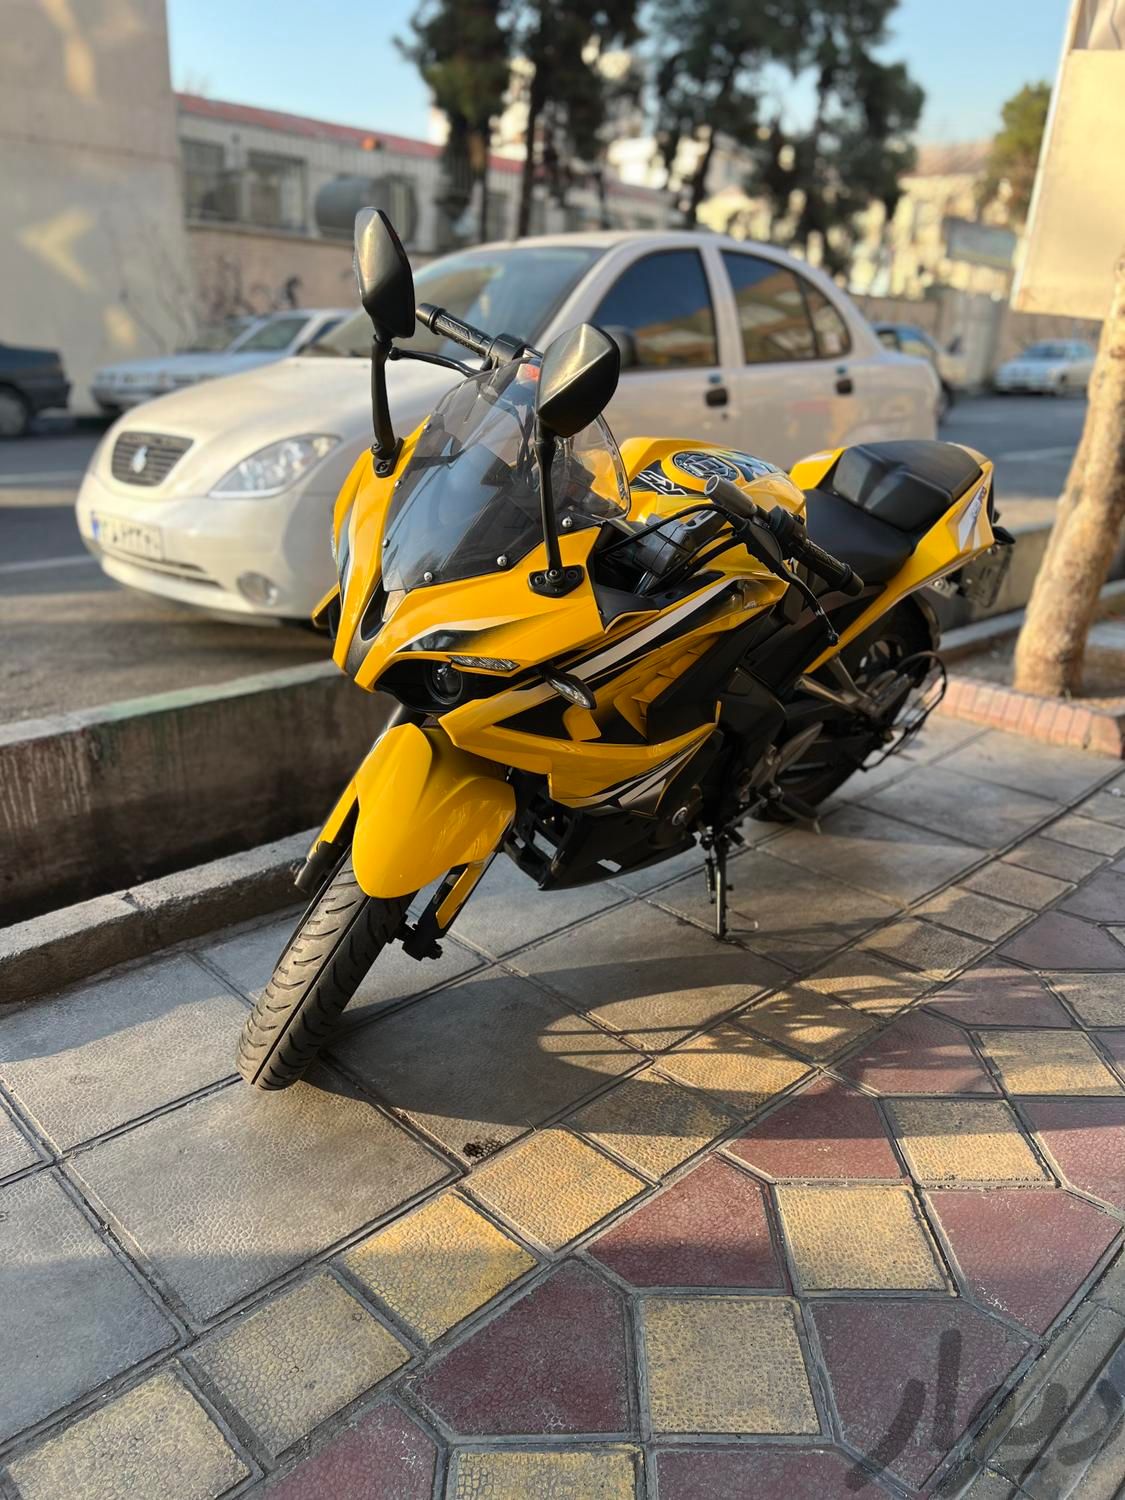 Rs200|موتورسیکلت|تهران, پیروزی|دیوار